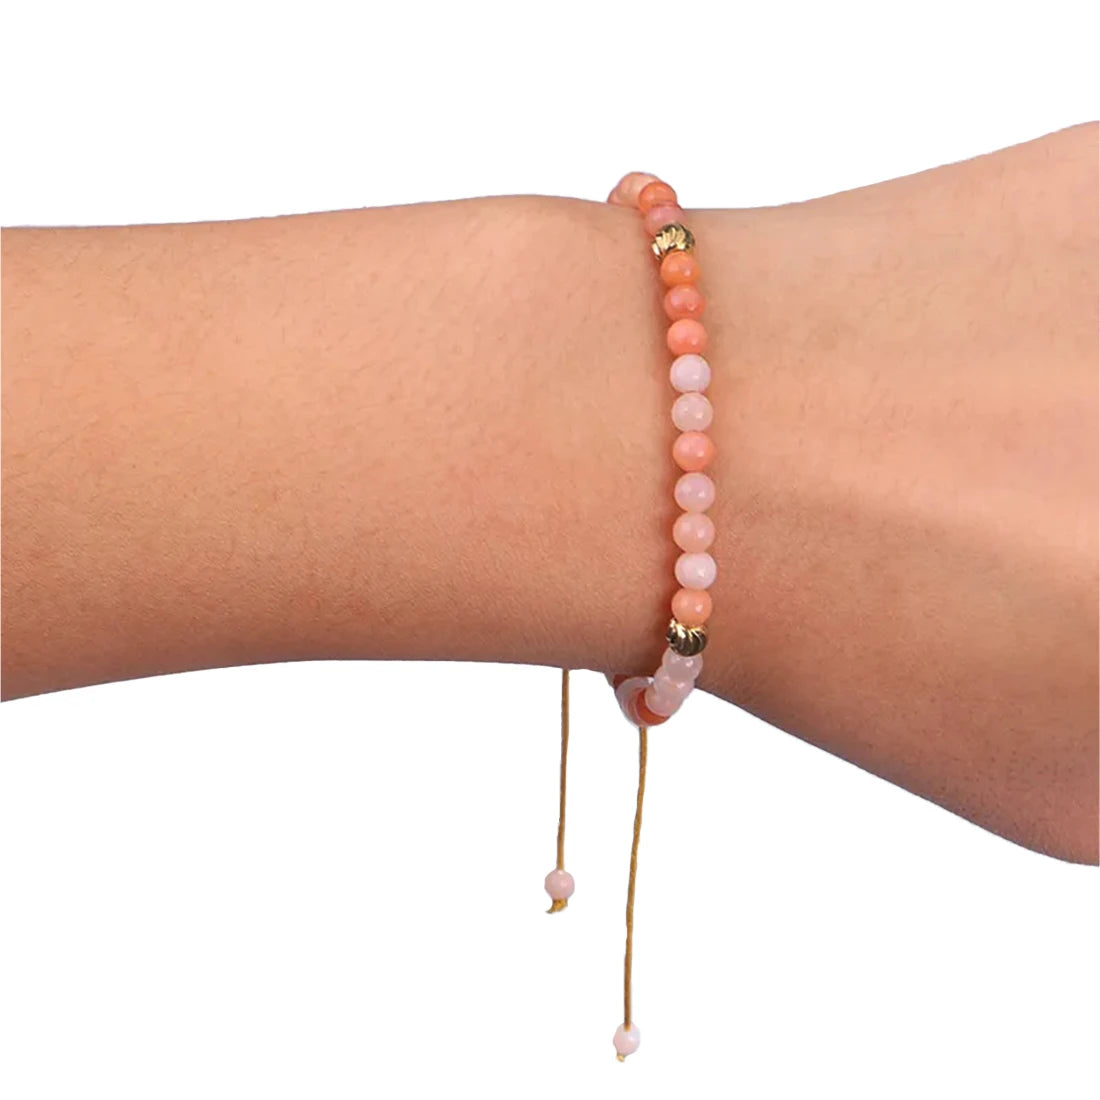 Spiritual Crystal Bracelet for all wrist sizes